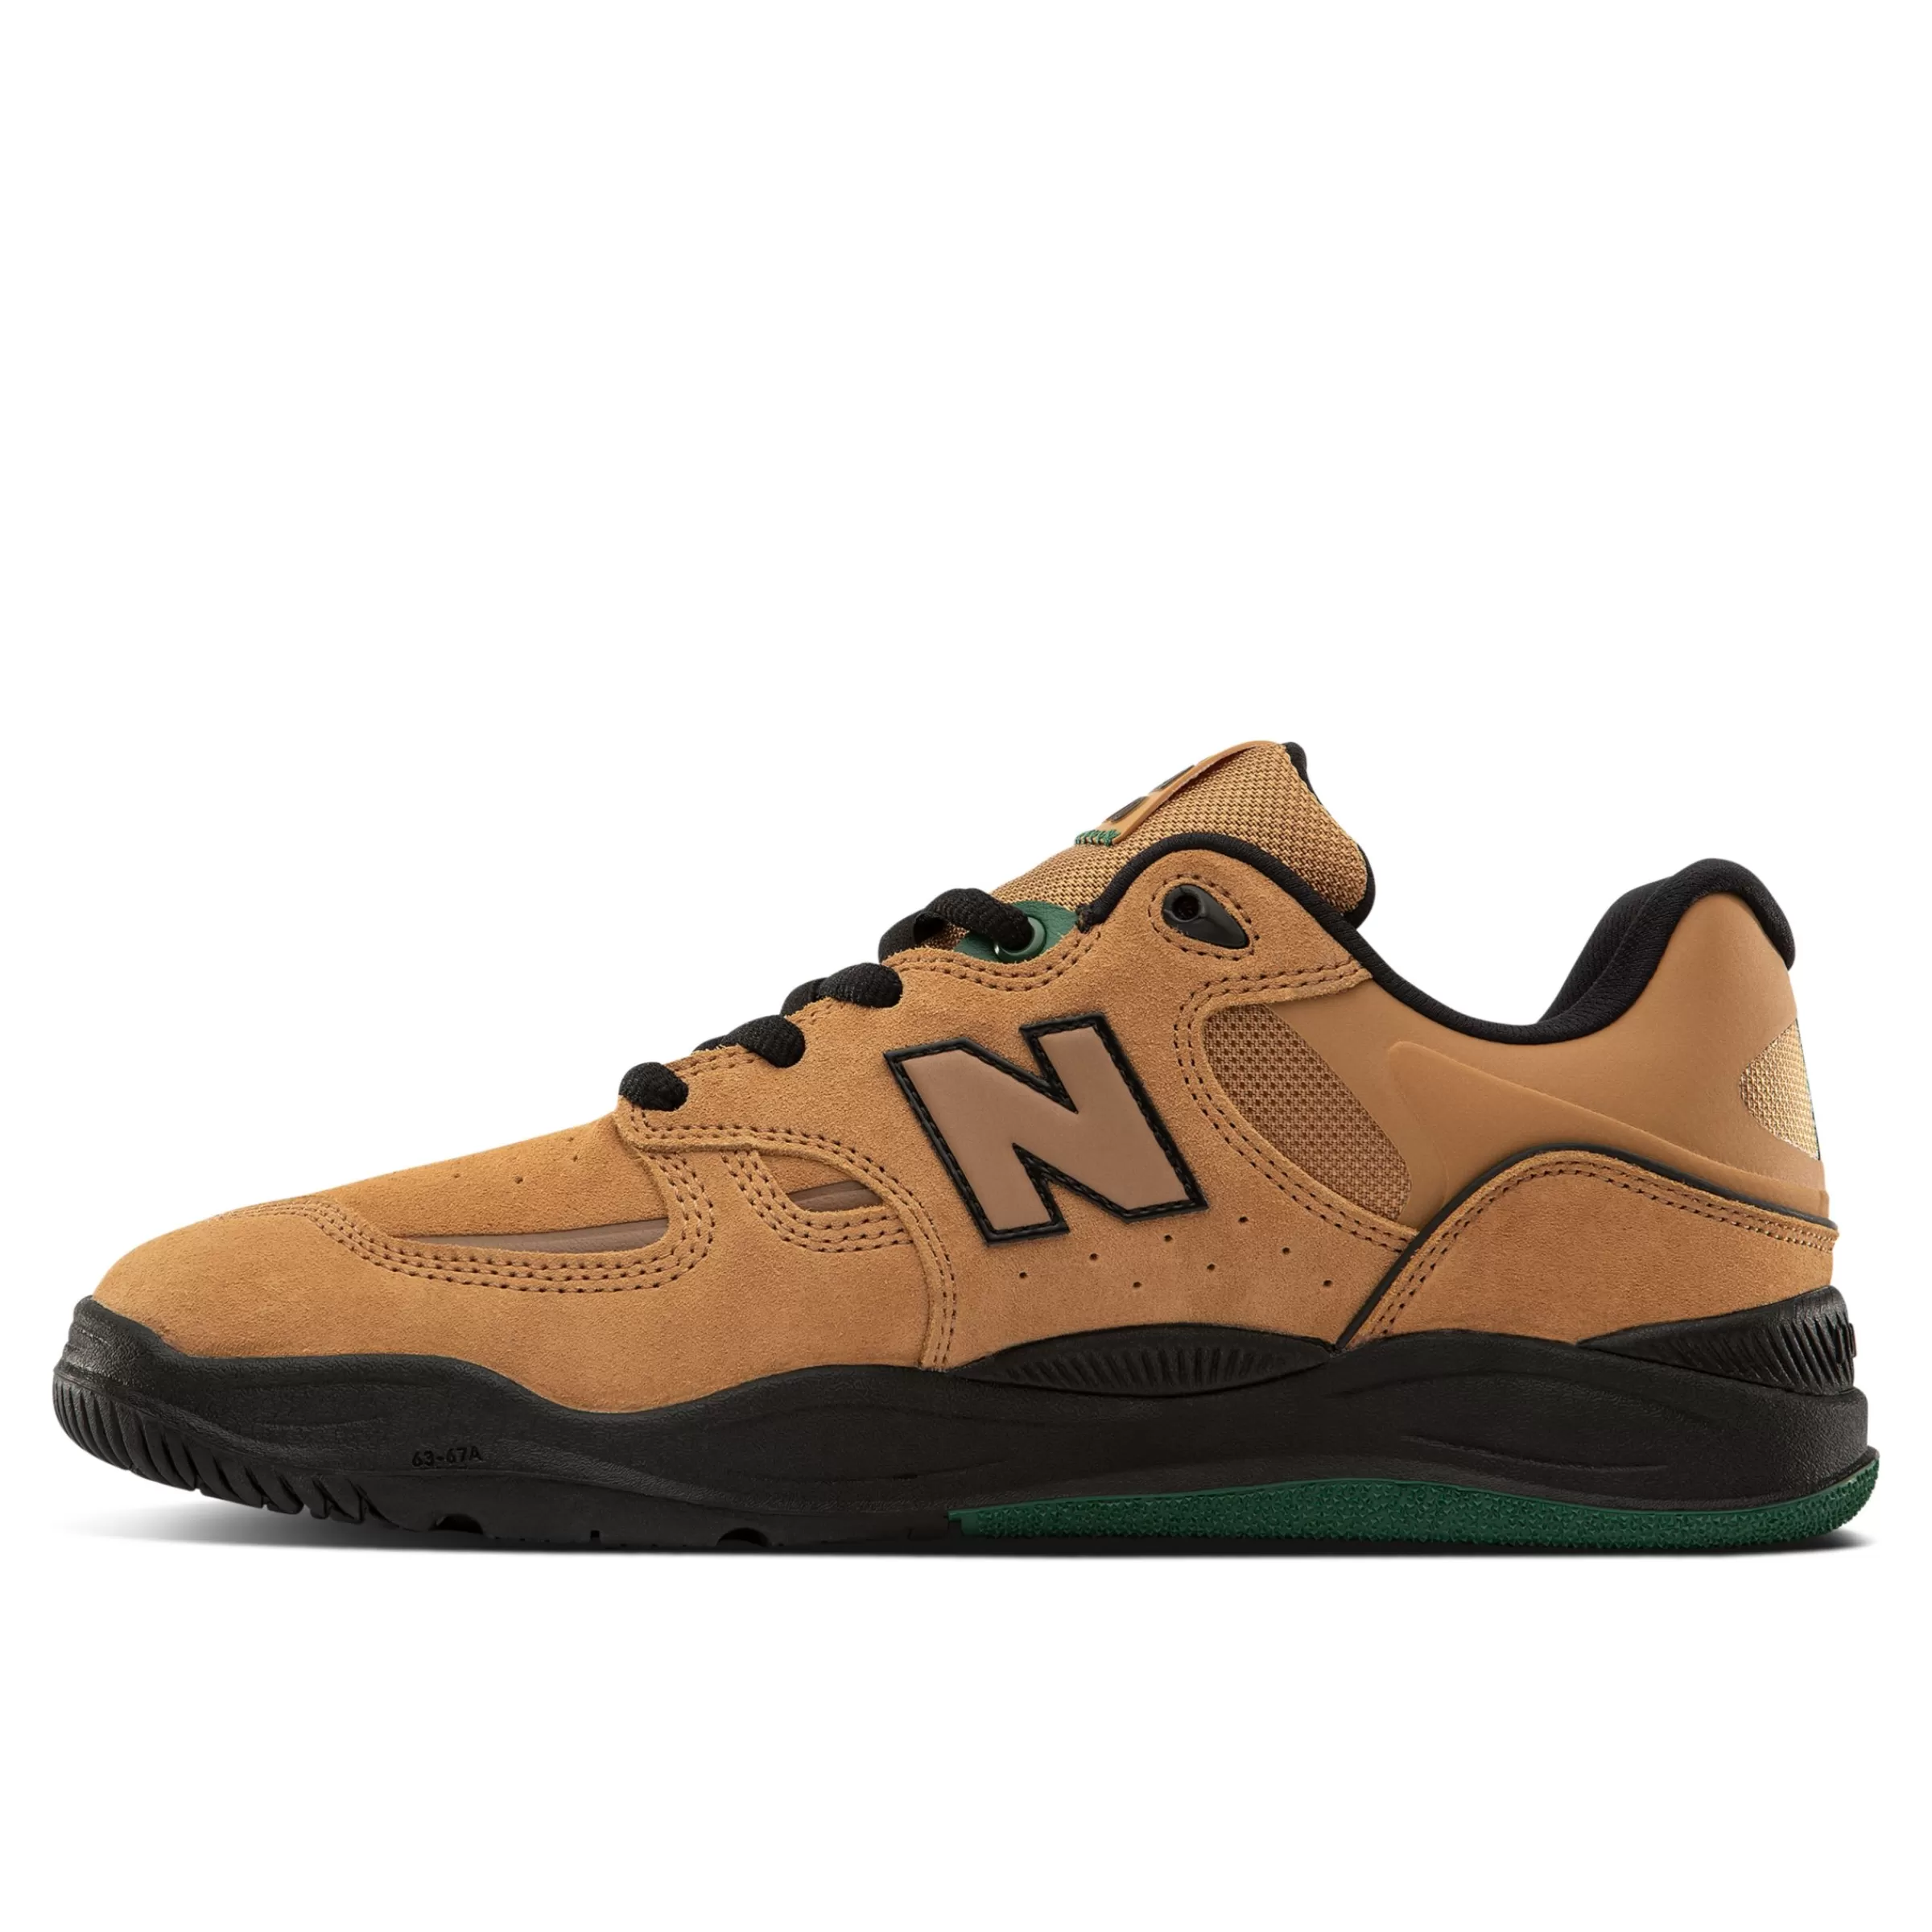 New Balance Chaussures Soldes-NBNumericTiagoLemos1010 Brown avec Green